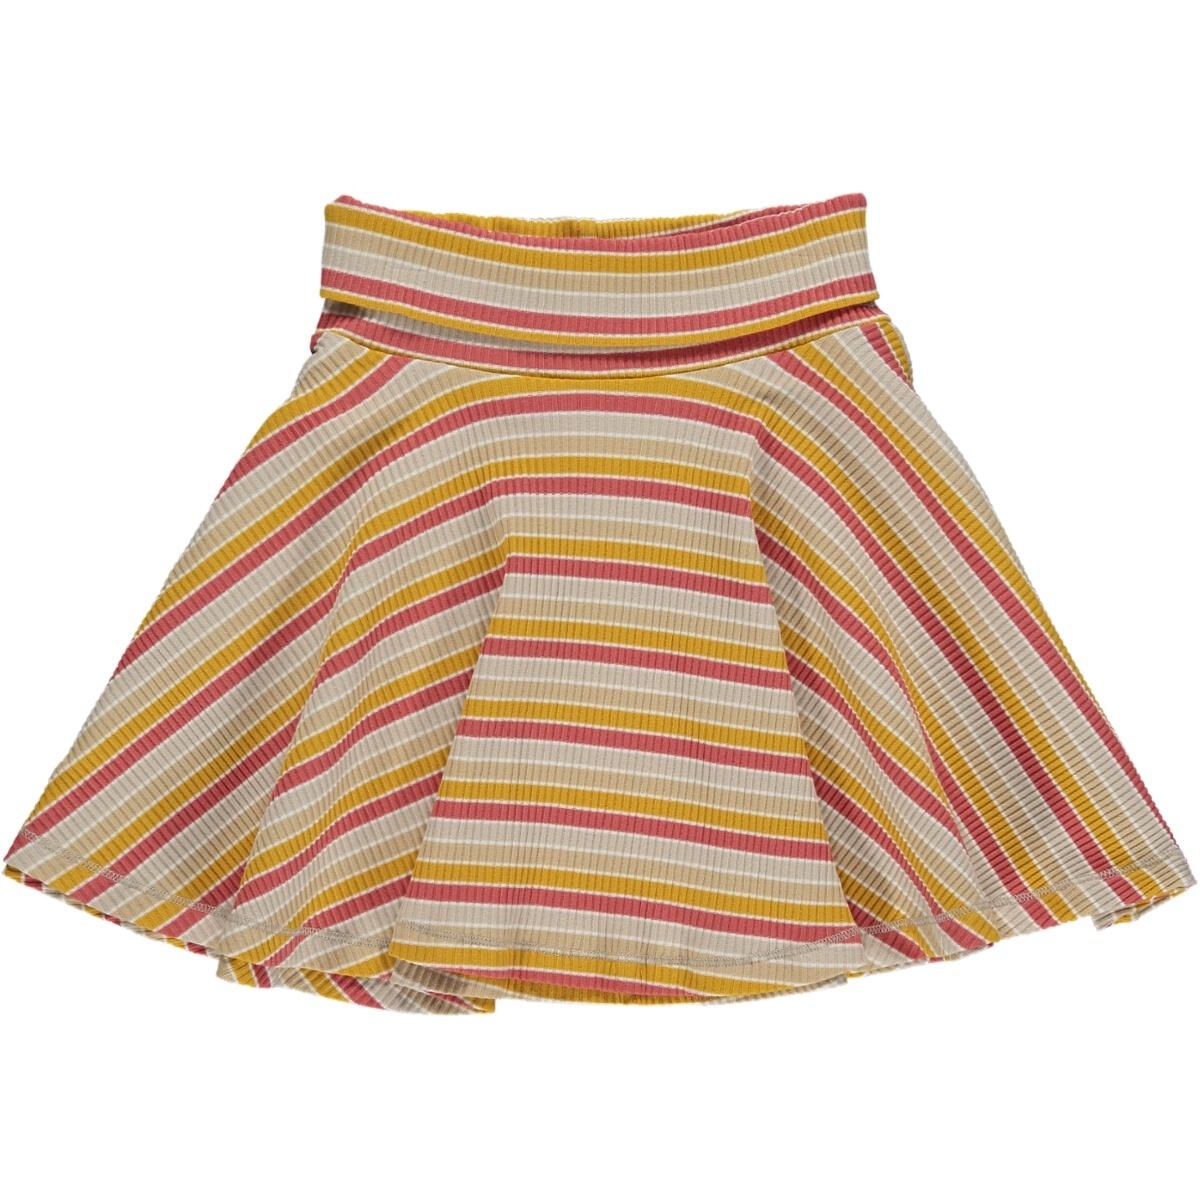 Vignette - Emory Skirt - Coral & Gold Stripe